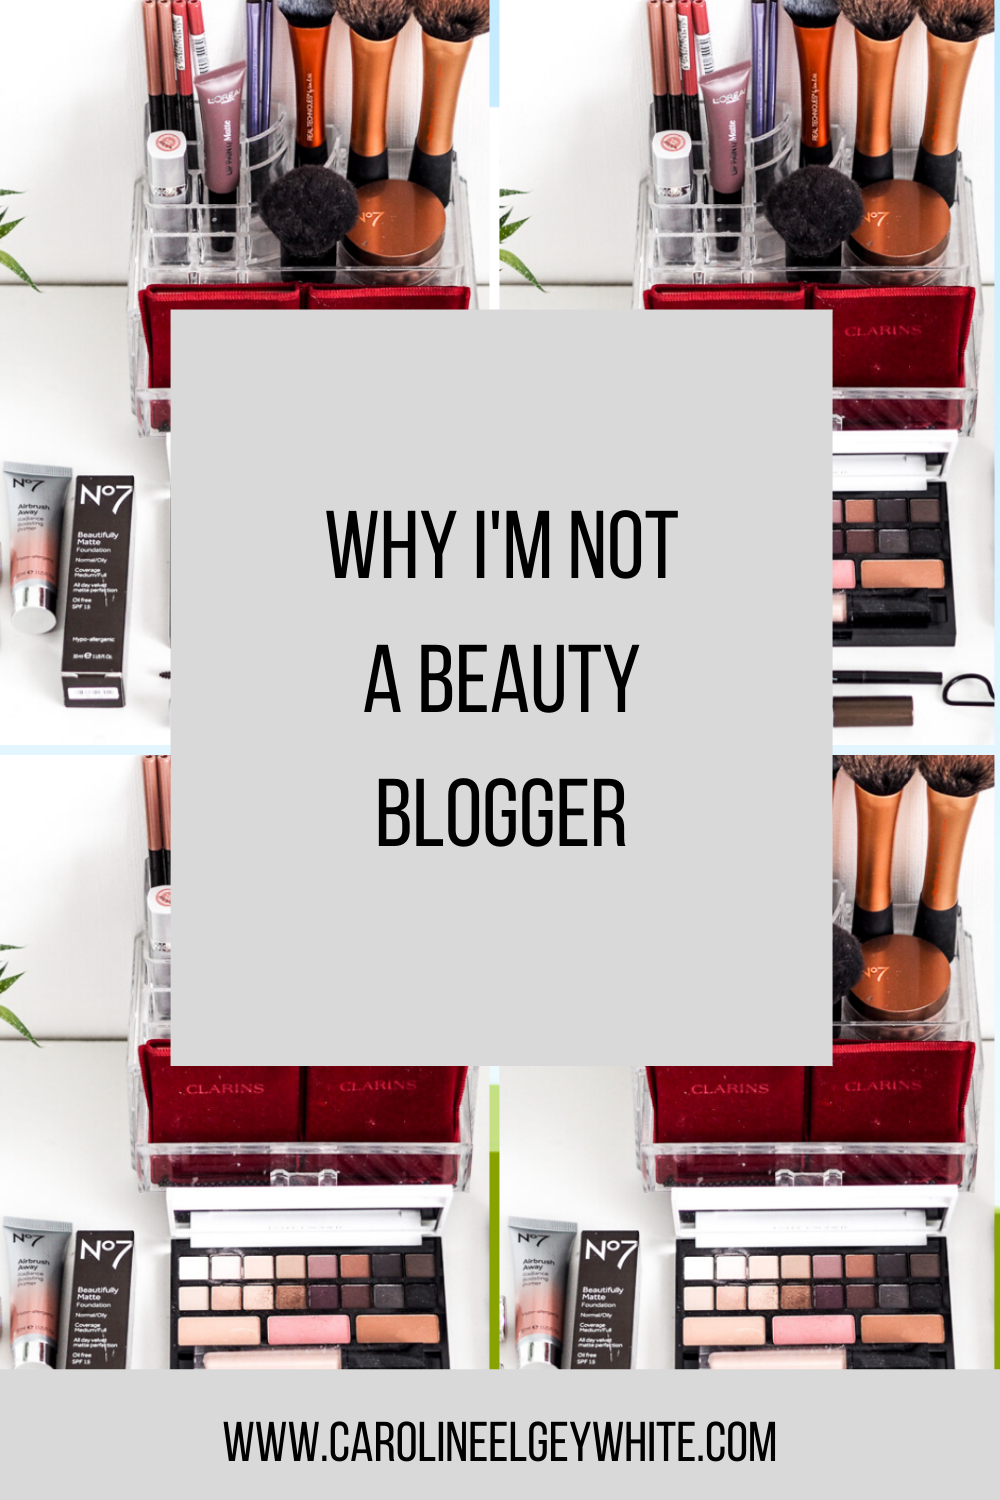 19 beauty Blogger names ideas